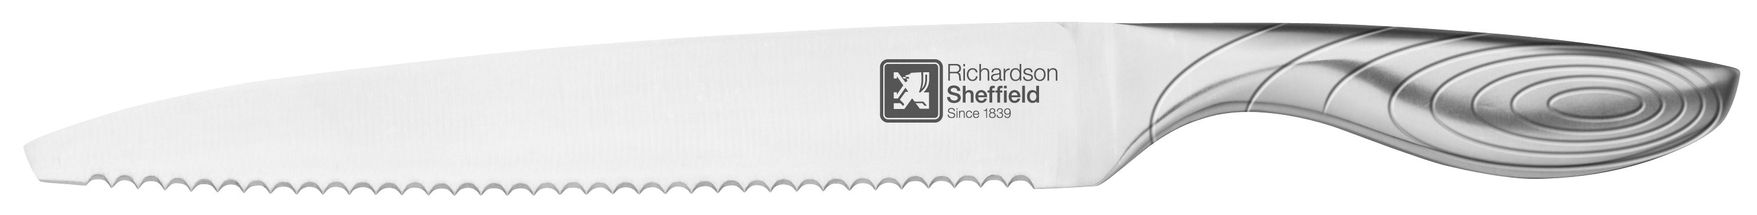 Richardson Sheffield Bread Knife Forme Contours 20 cm